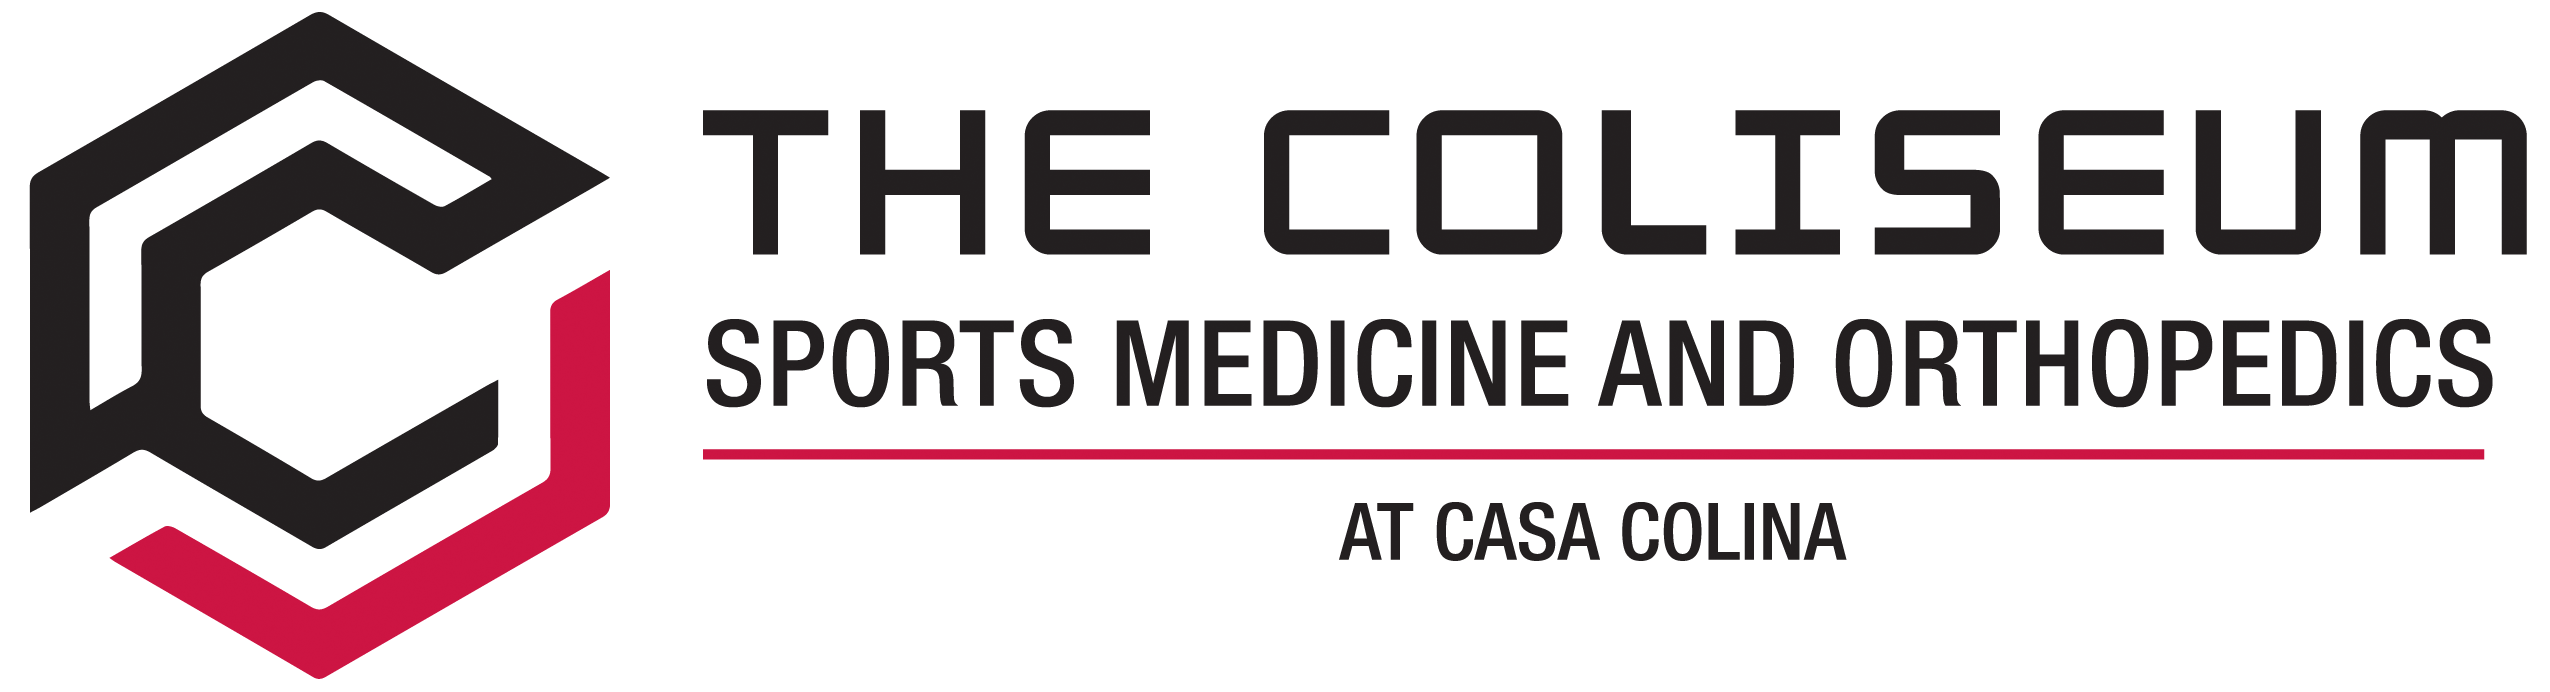 Coliseum program logo